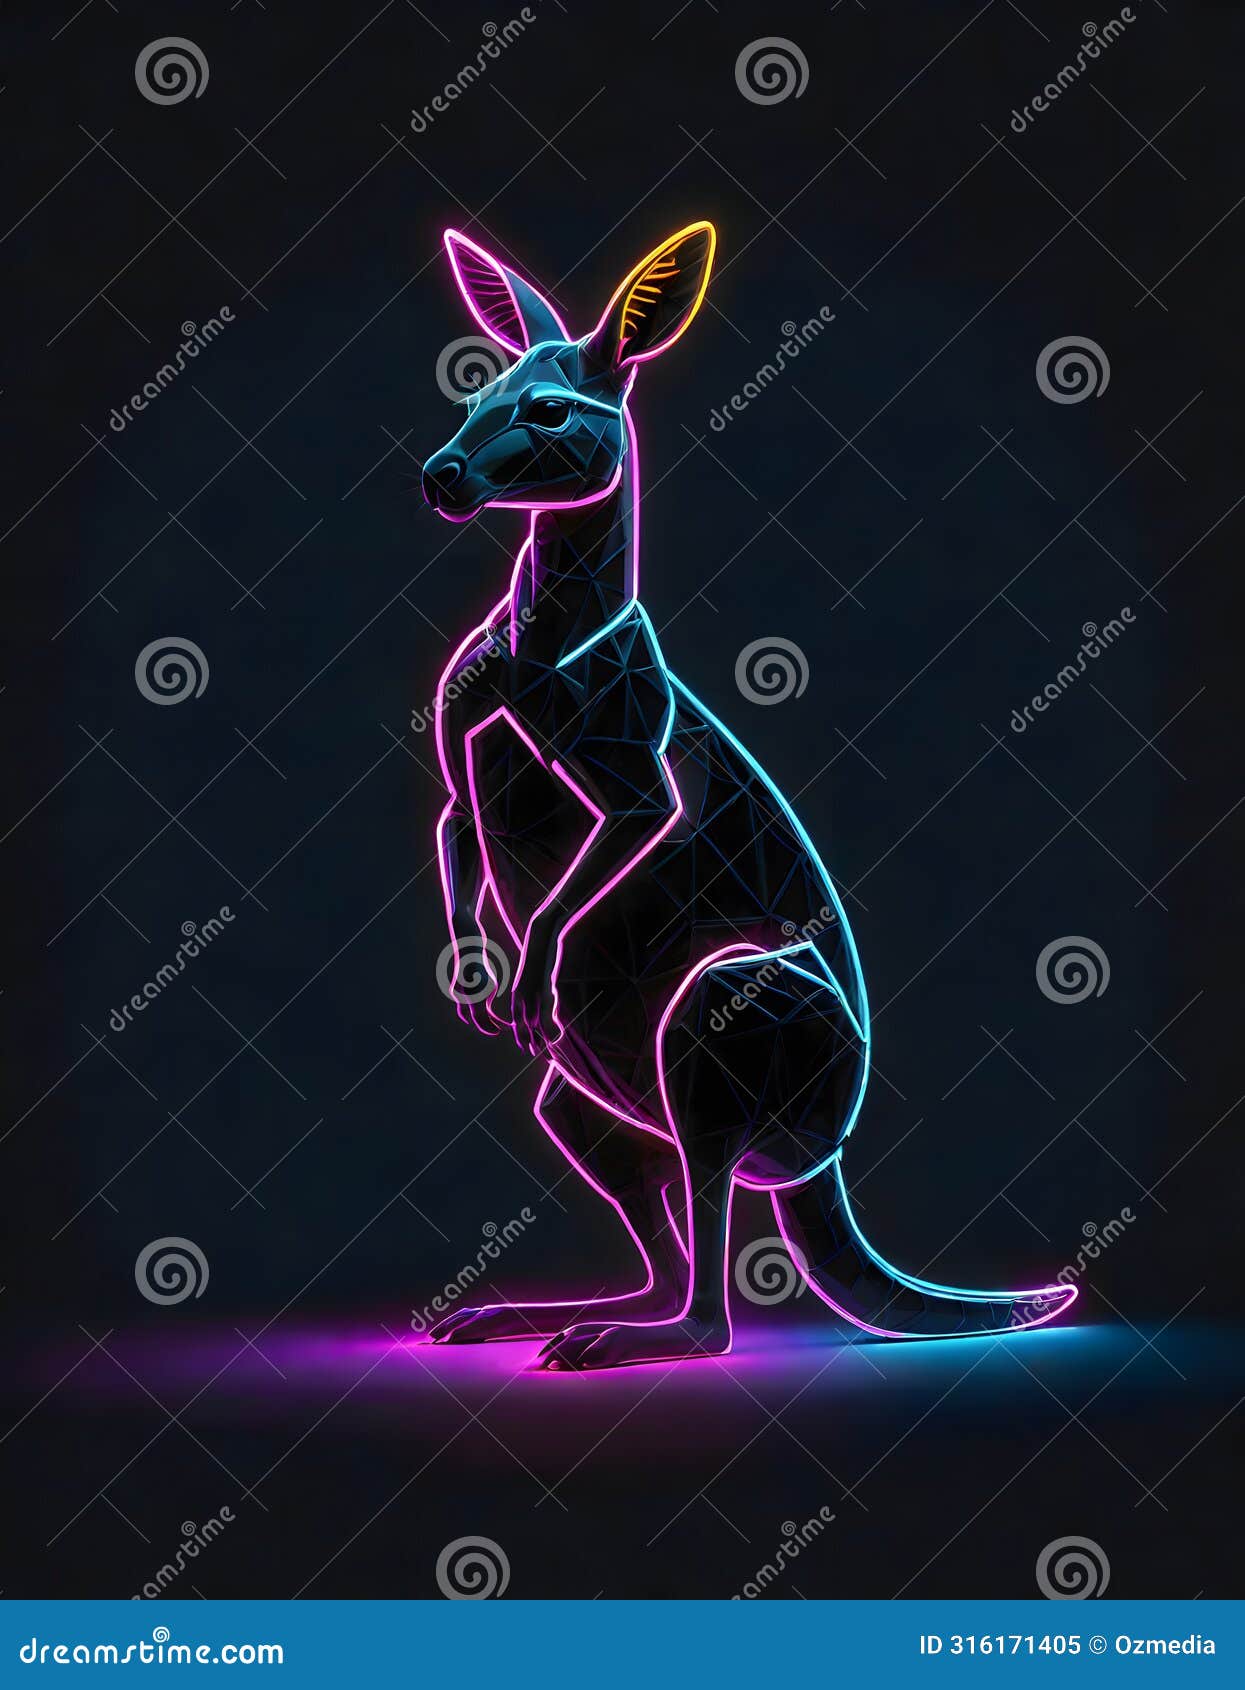 bright and playful portrayal of a kangaroo, generative a?